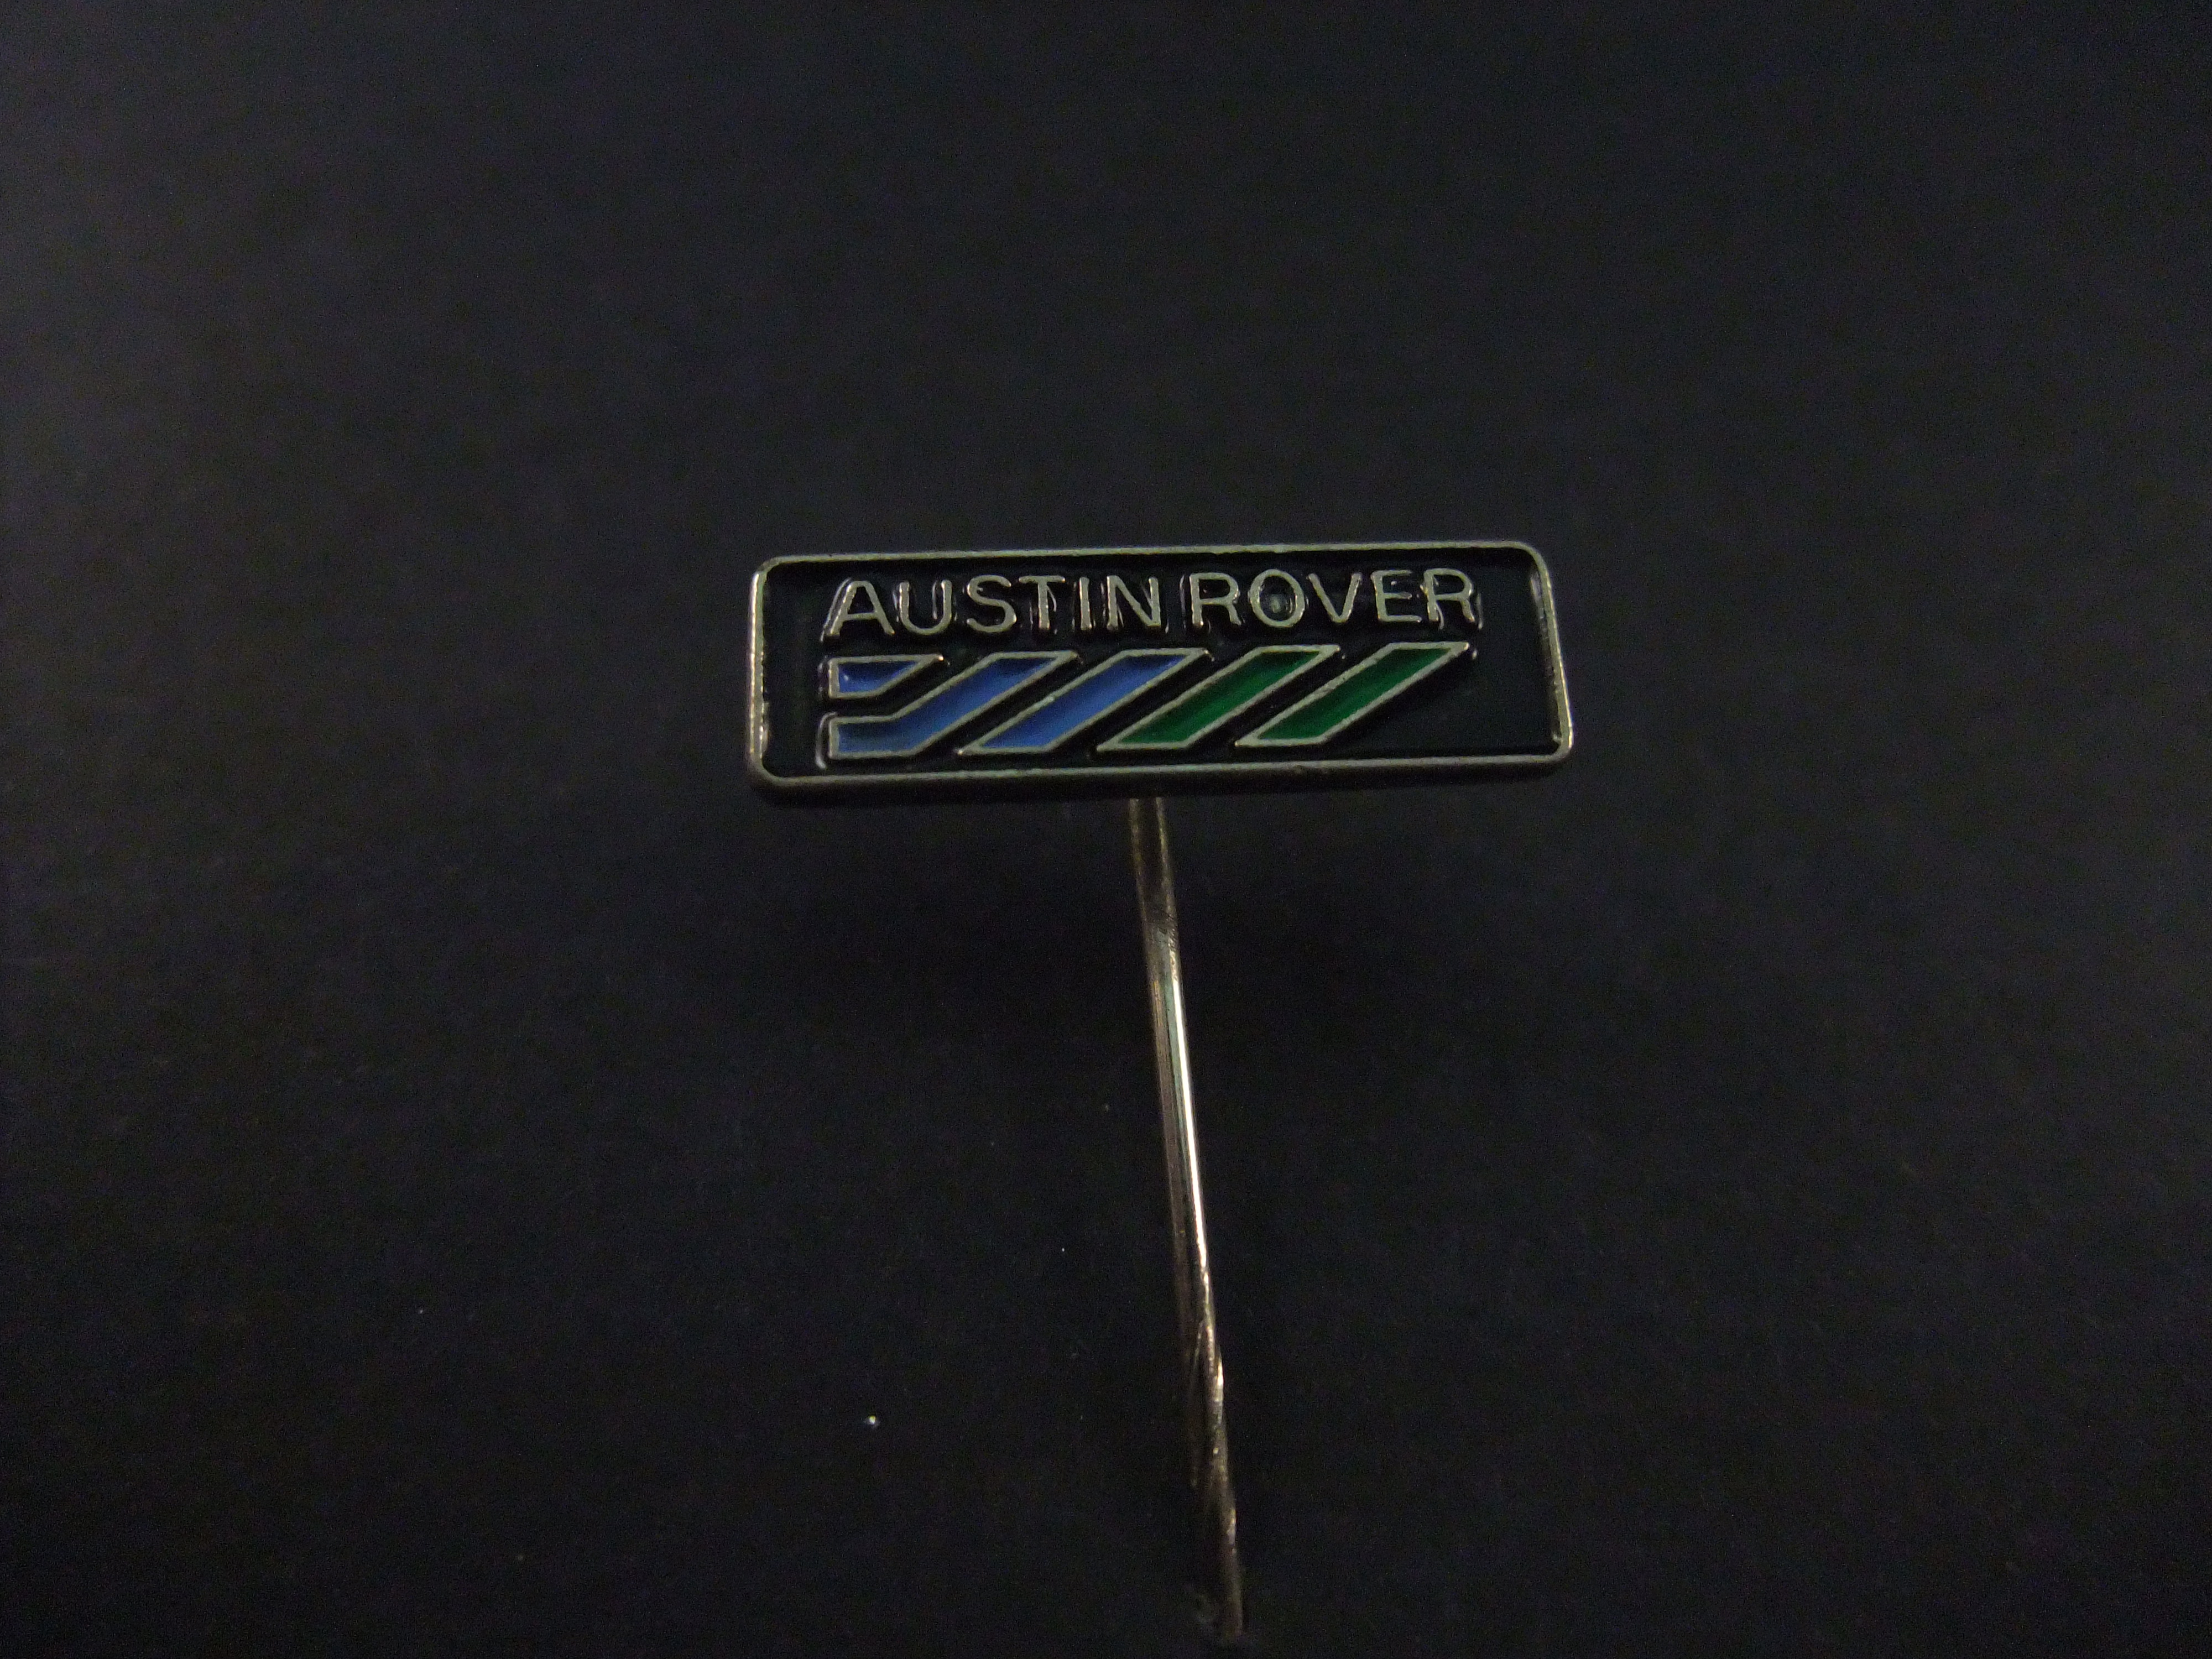 Austin Rover Britse motorfabrikant